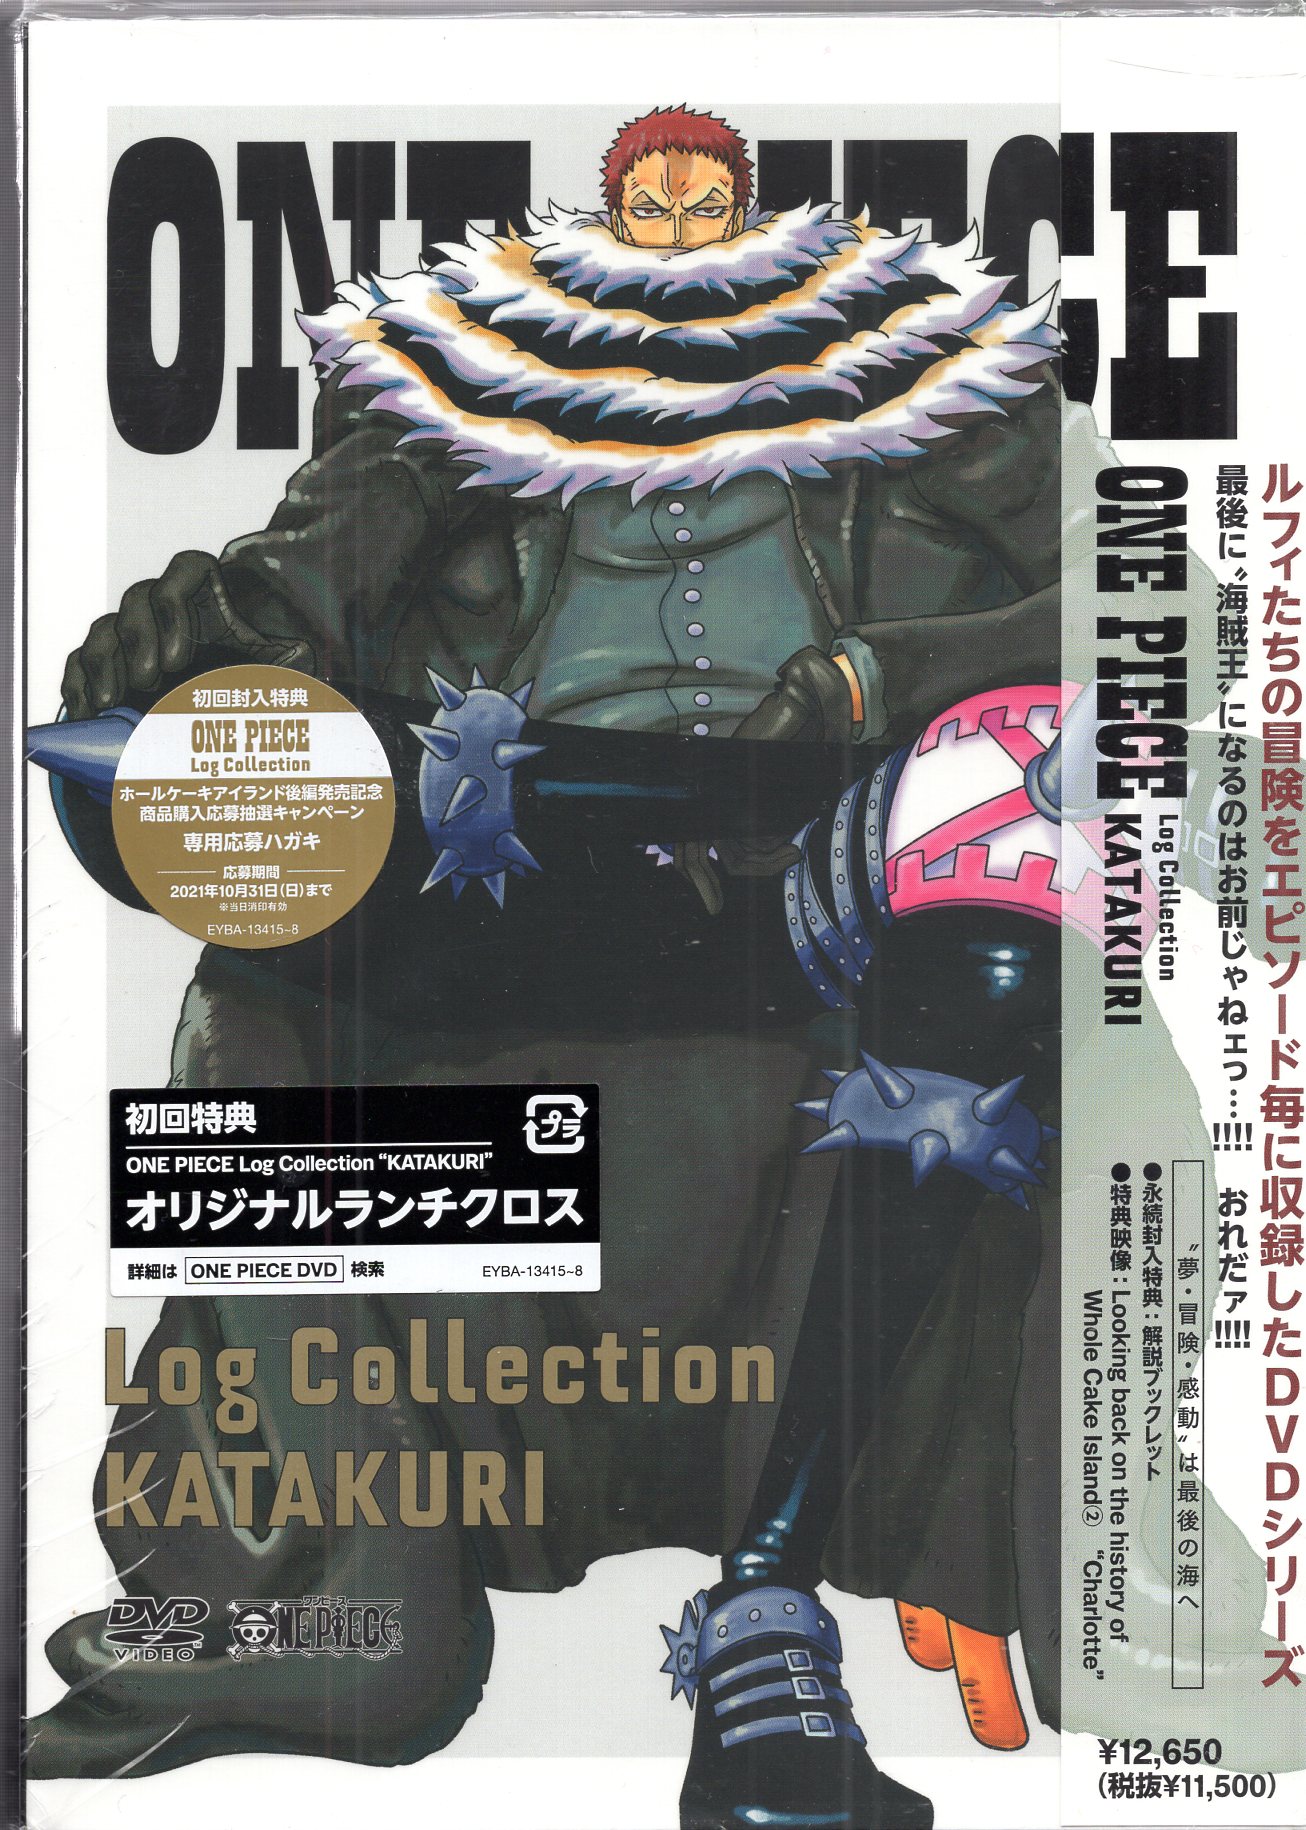 Avex-Pictures Anime DVD ONE PIECE Log Collection “KATAKURI